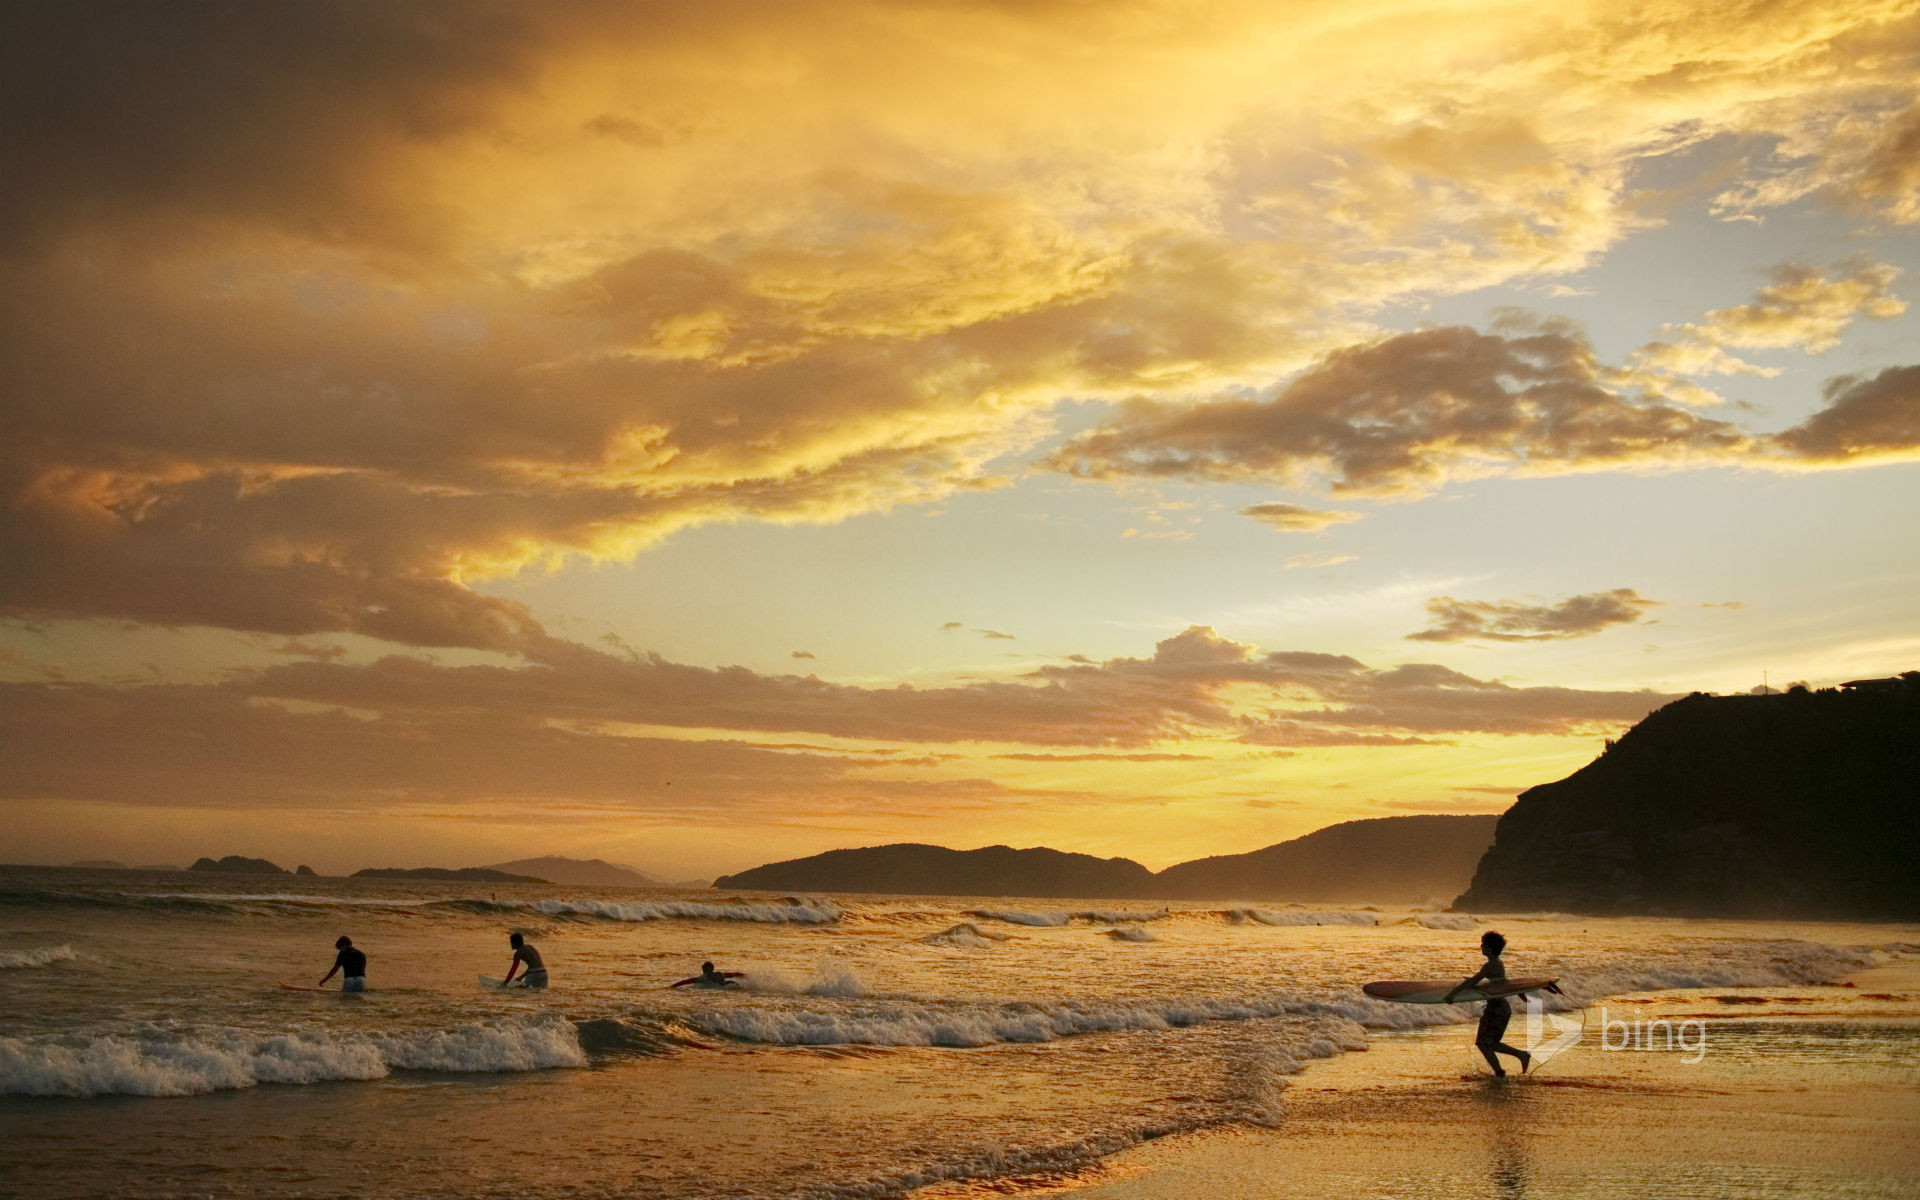 People surfing at dusk, Geriba Beach, Buzios, Brazil